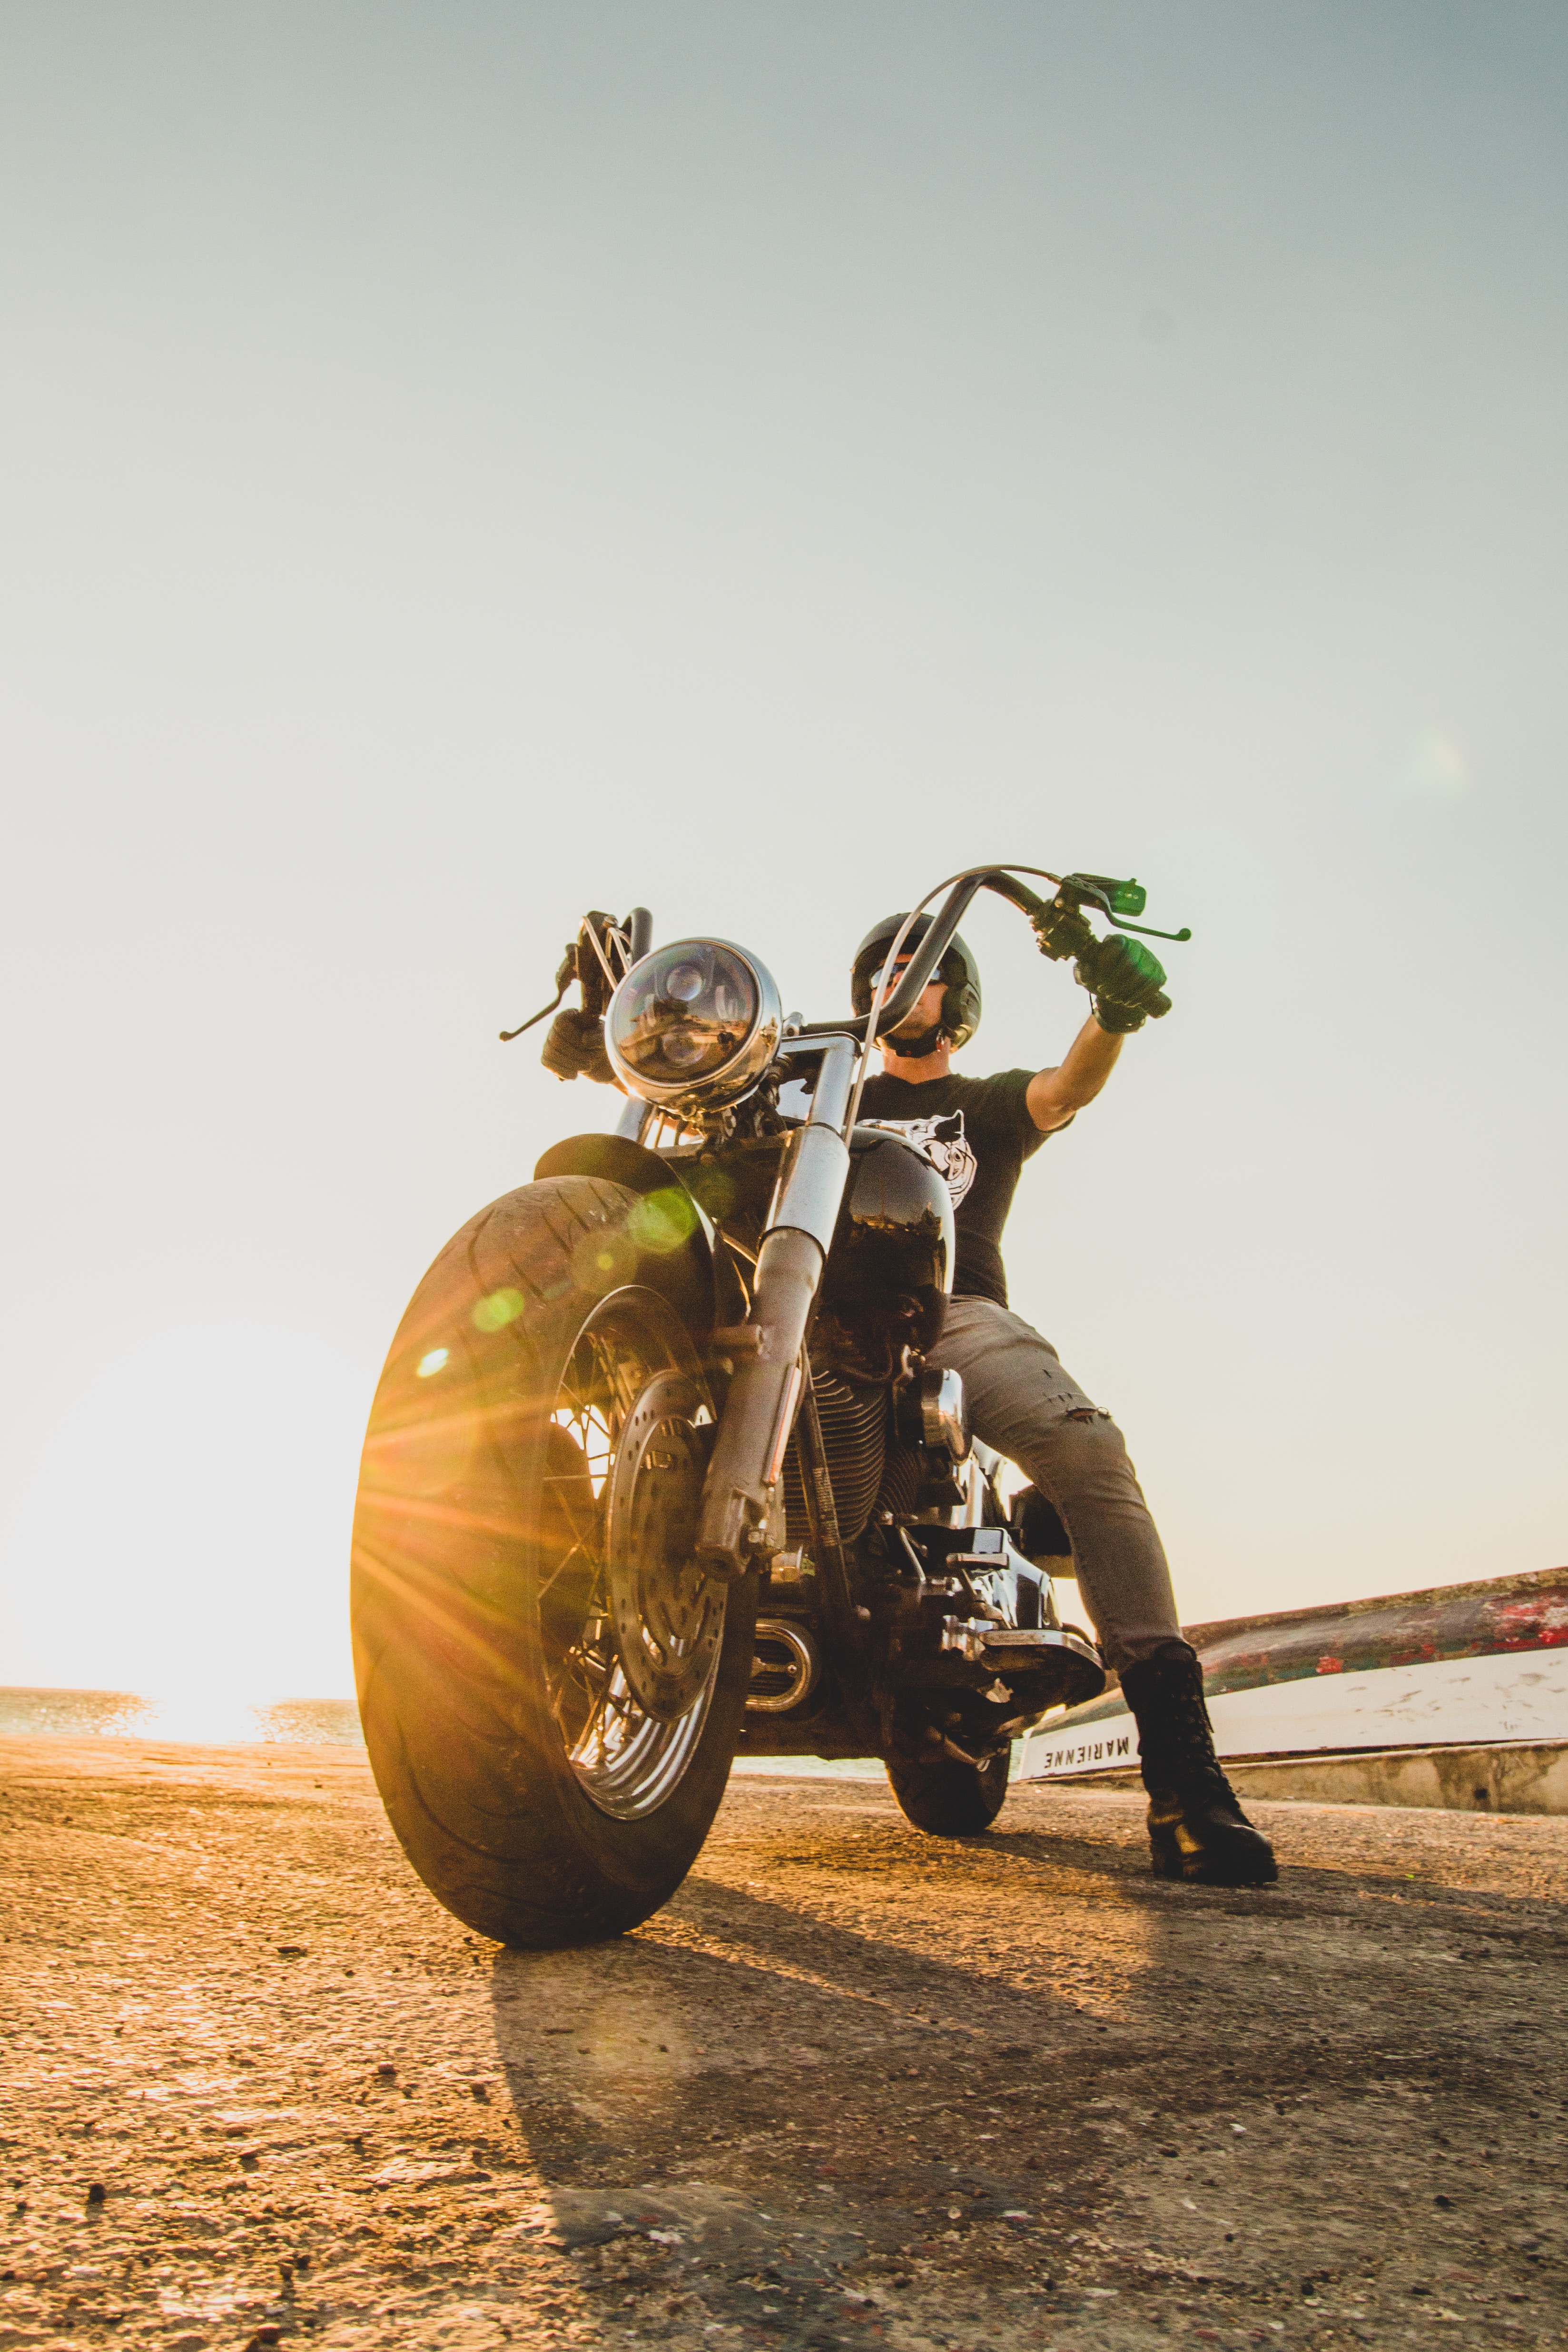 Mobile Wallpaper Bike motorcycles, motorcycle, motorcyclist, wheel